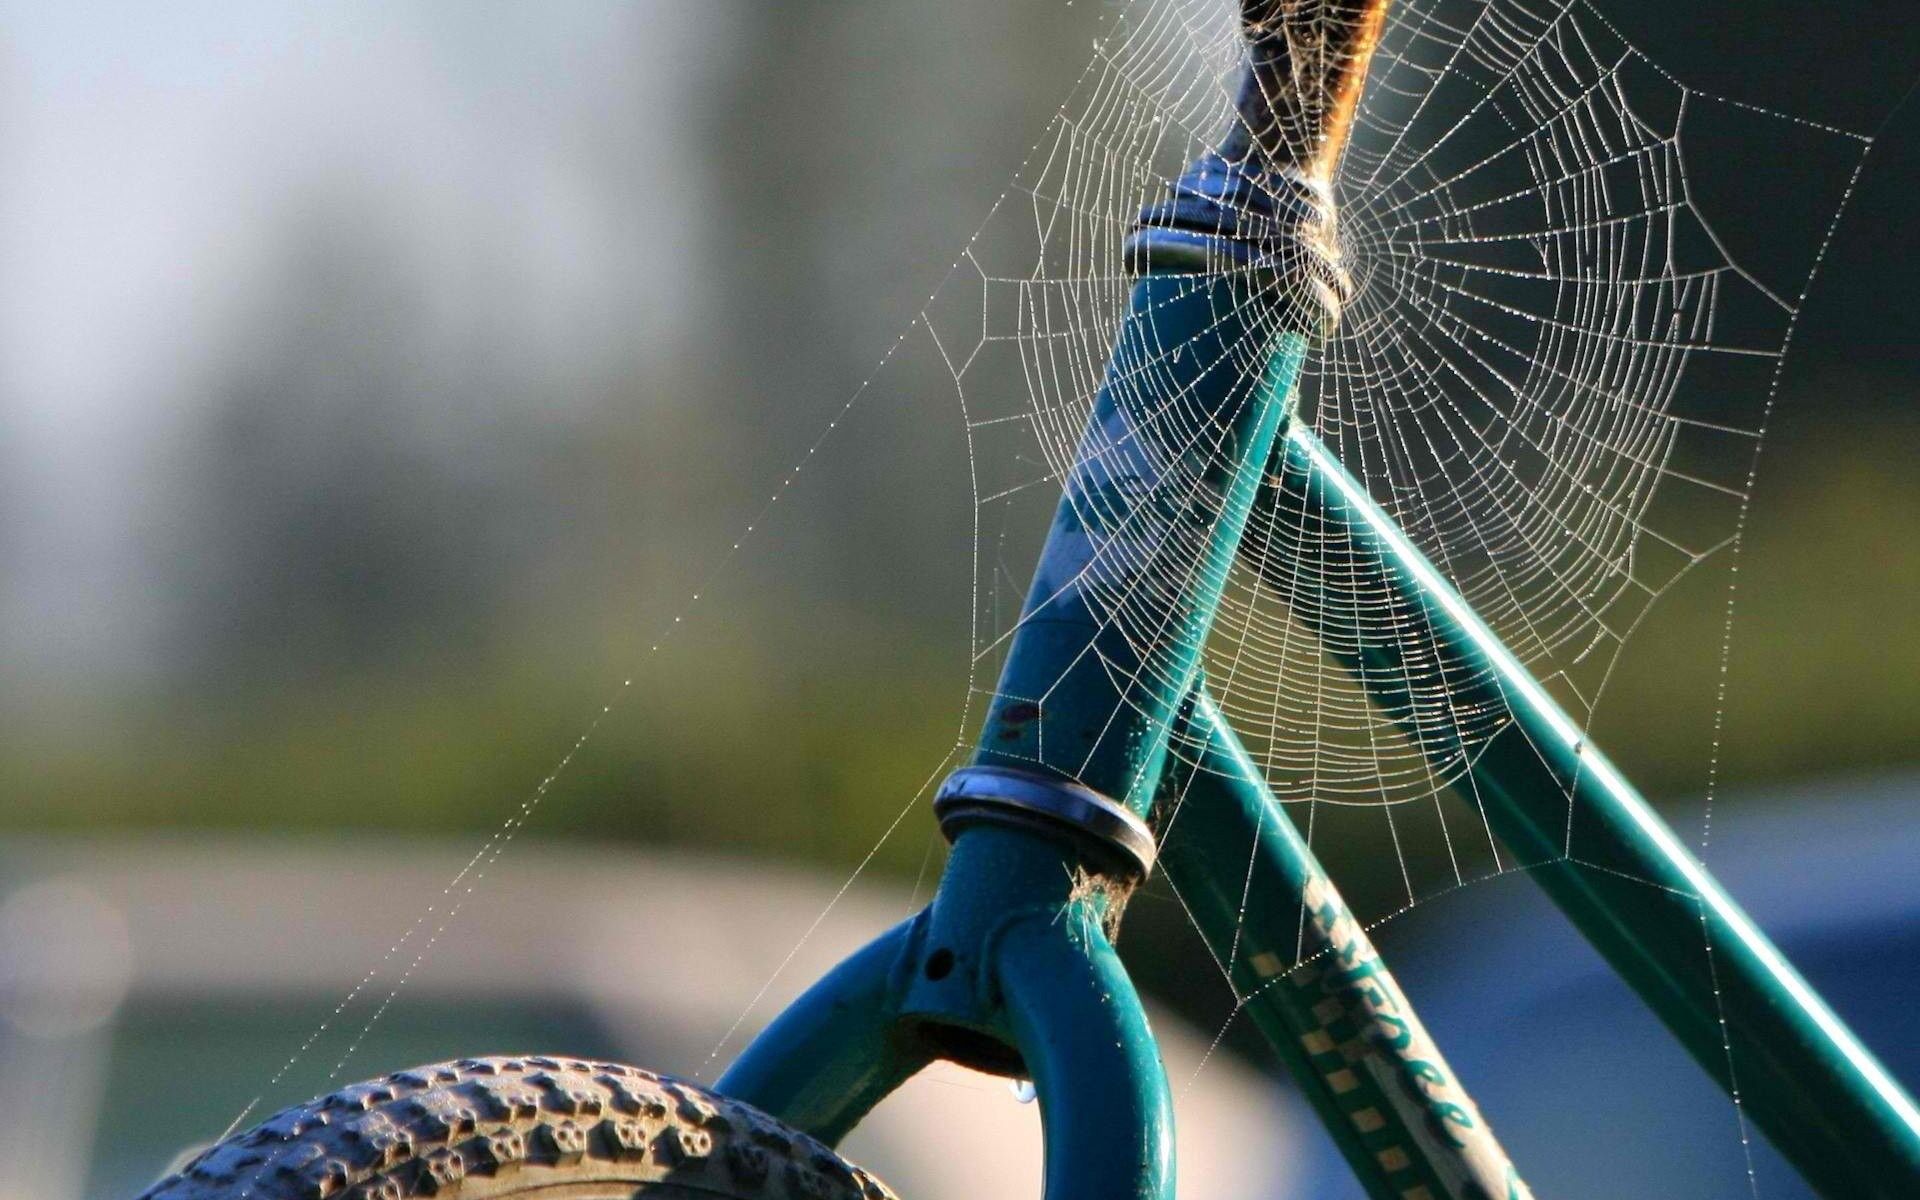 Widescreen image miscellanea, frame, wheel, bicycle